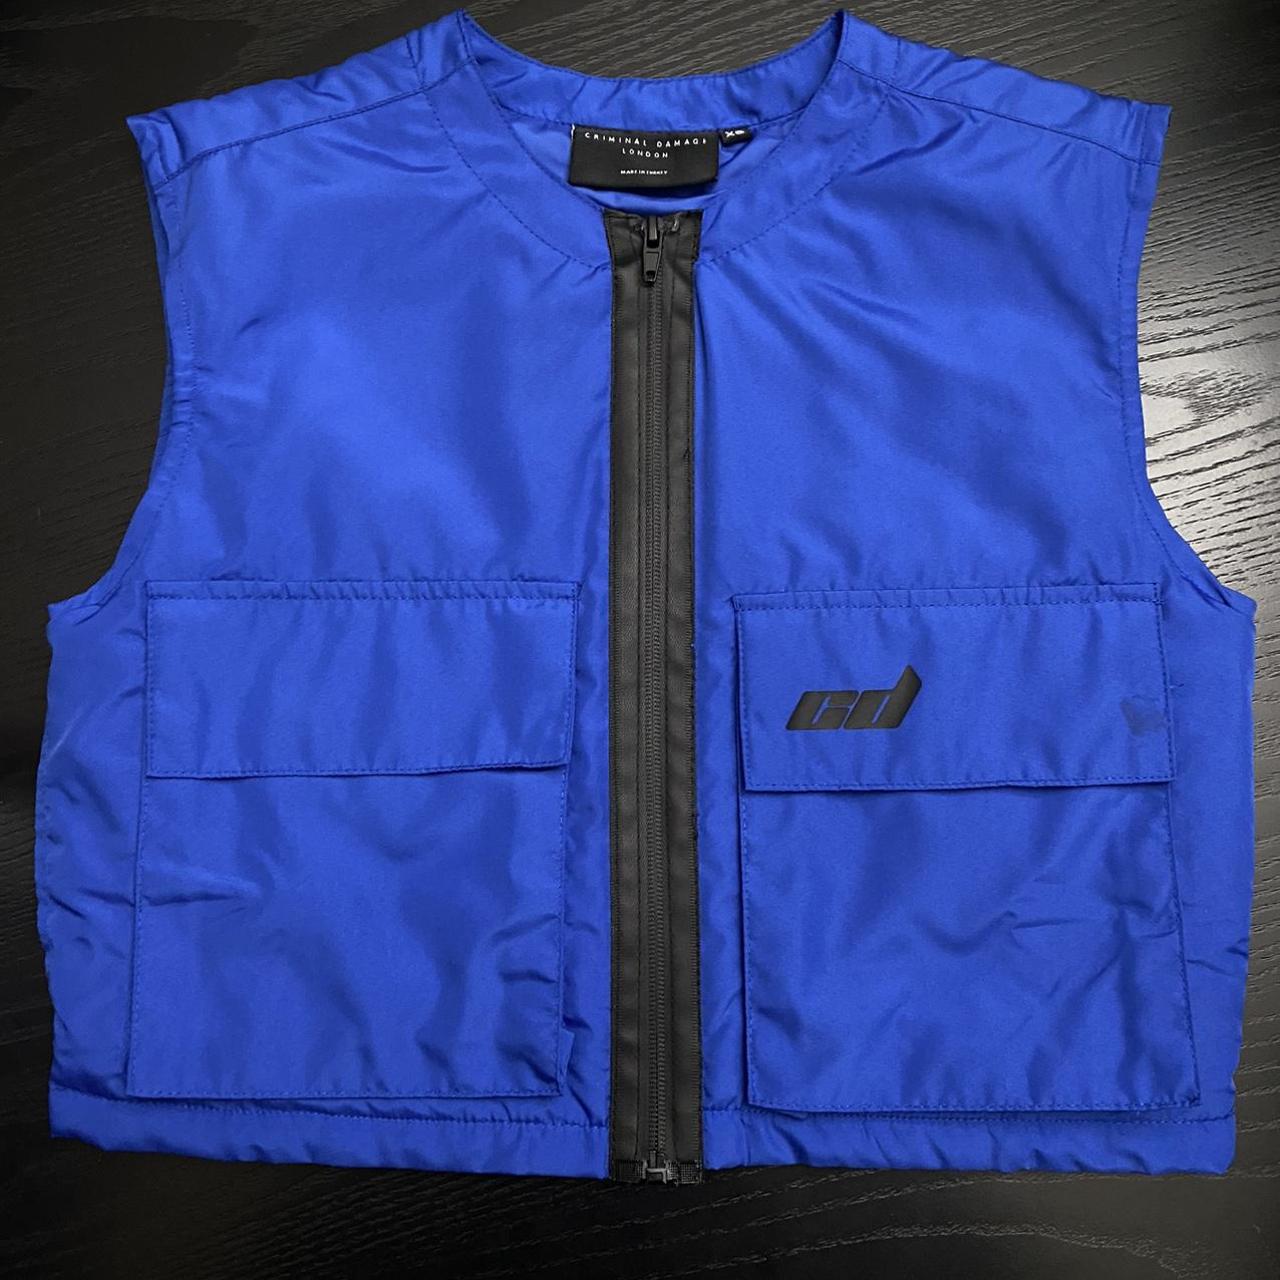 Product Image 3 - Blue cropped tactile vest
size xs